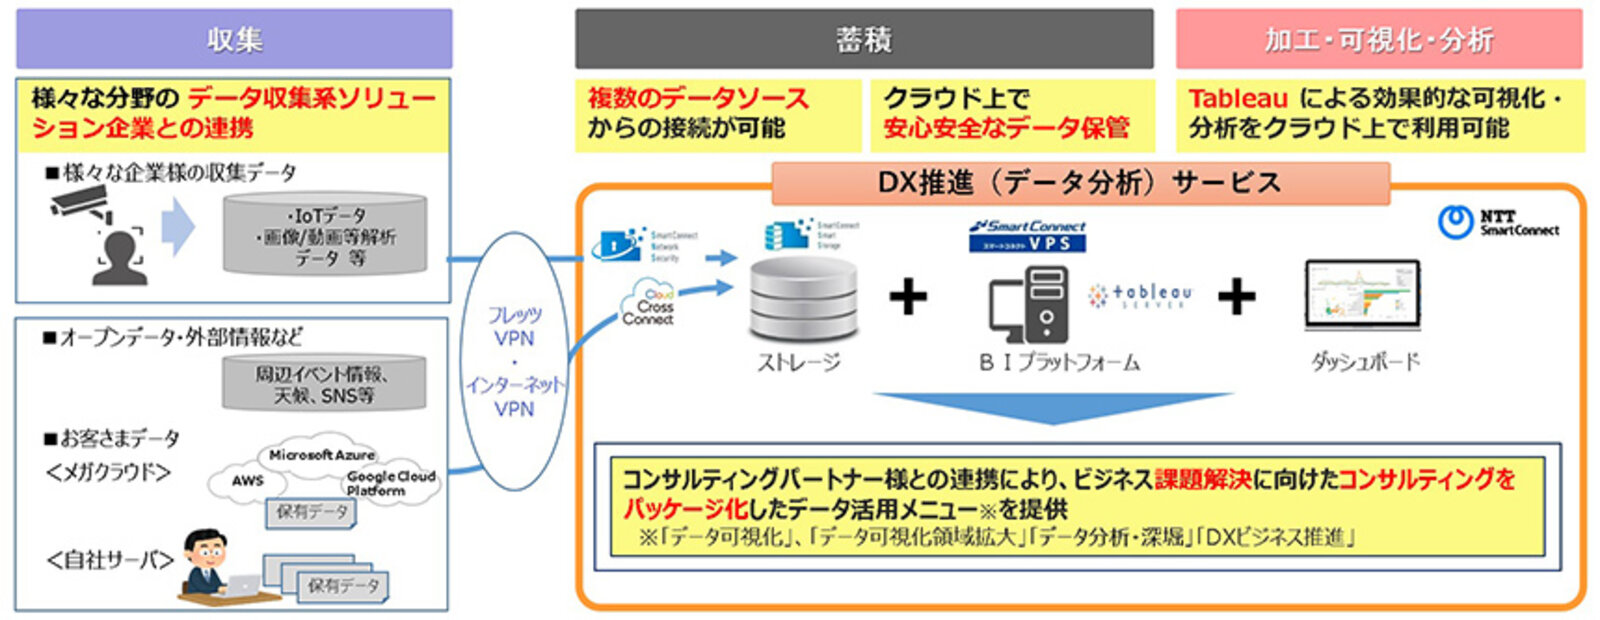 NTTスマートコネクトがデータ分析パッケージ「SmartConnect DX推進